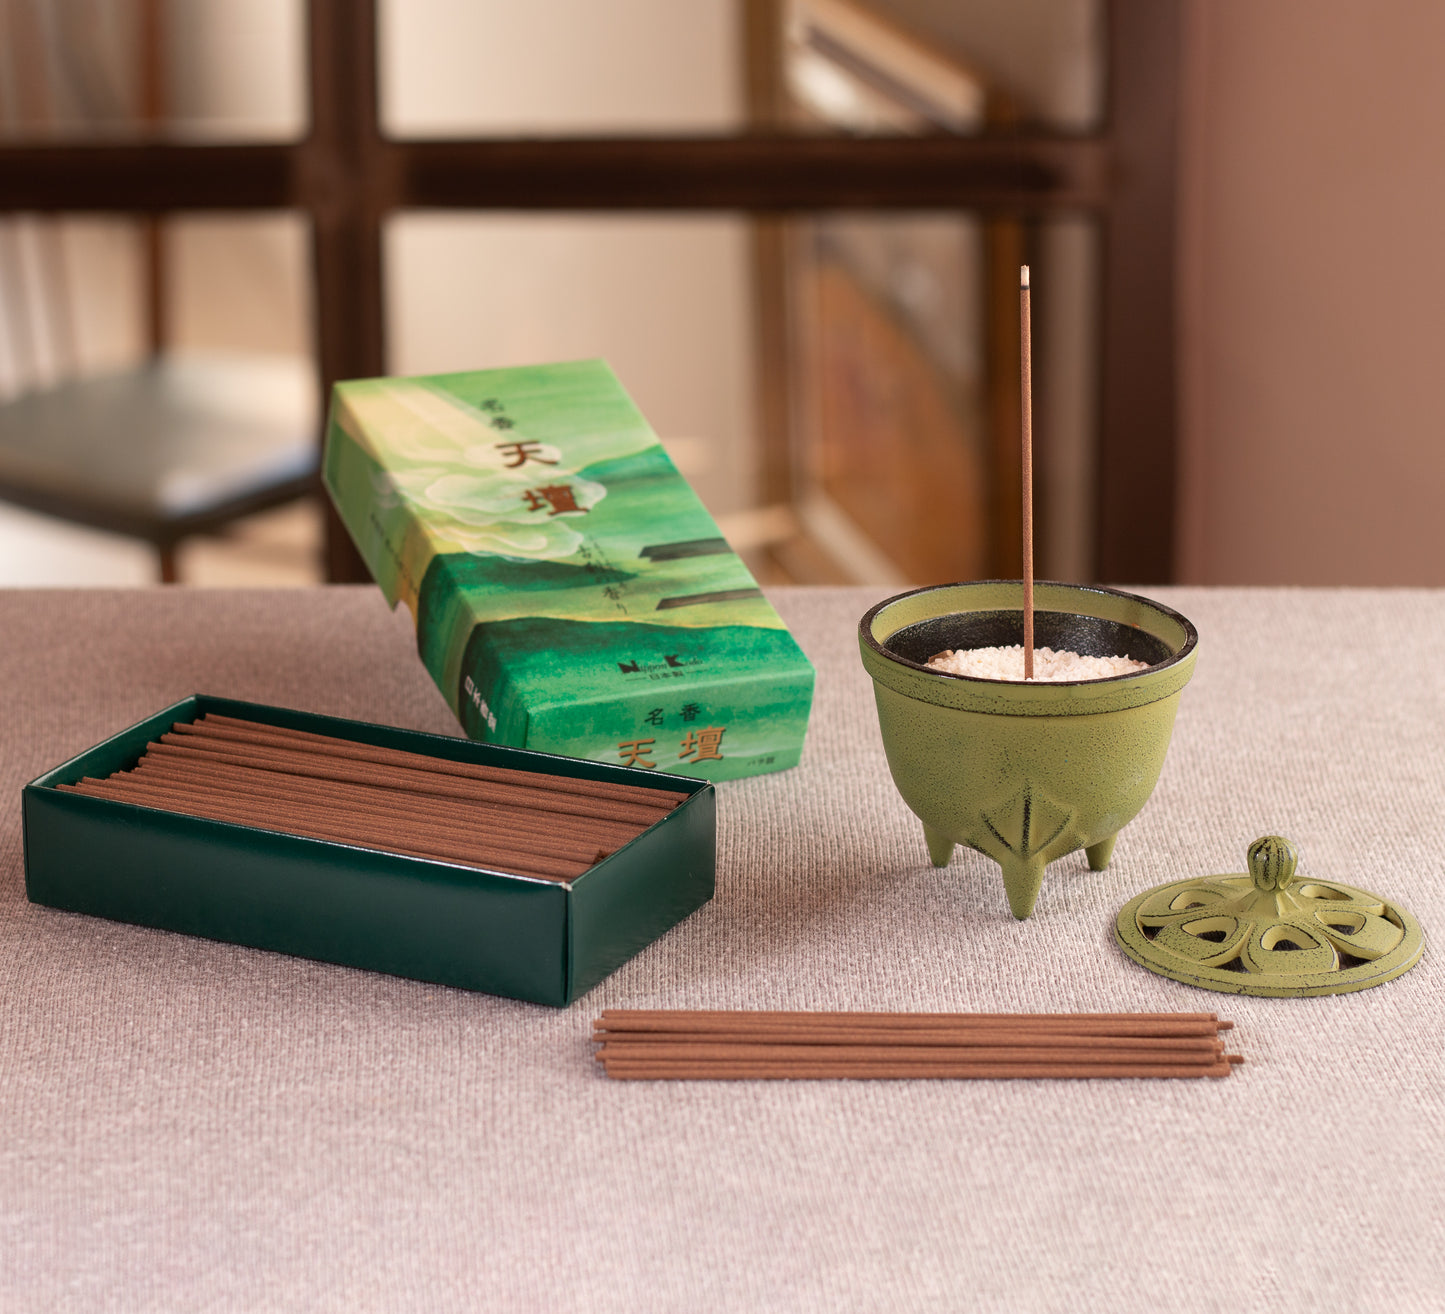 Tendan Incense - Meiko, Large Box